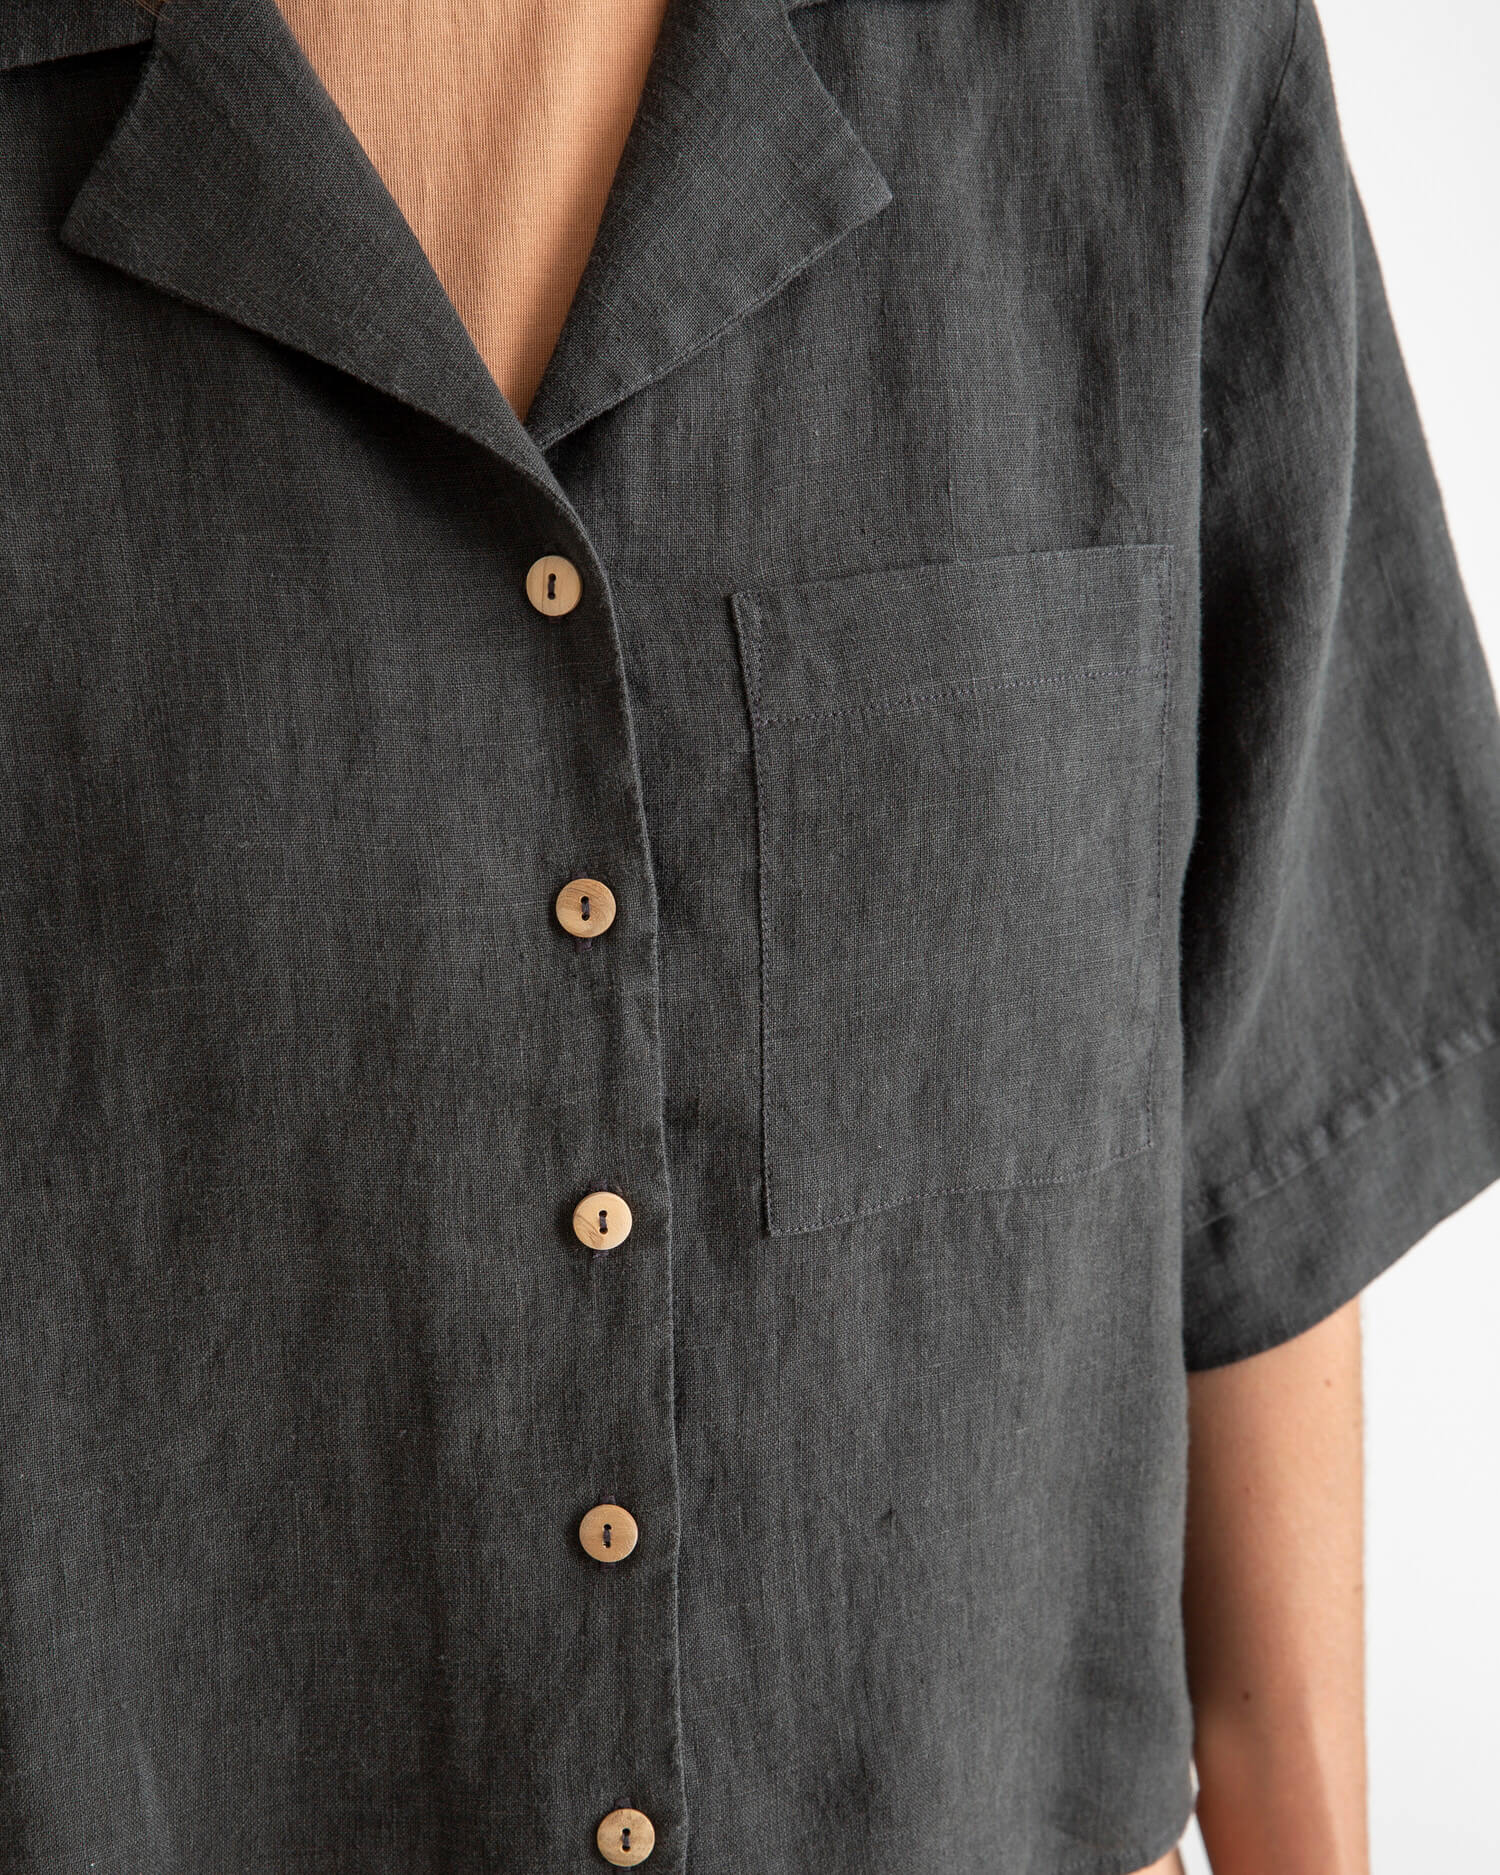 Black linen blouse from Matona